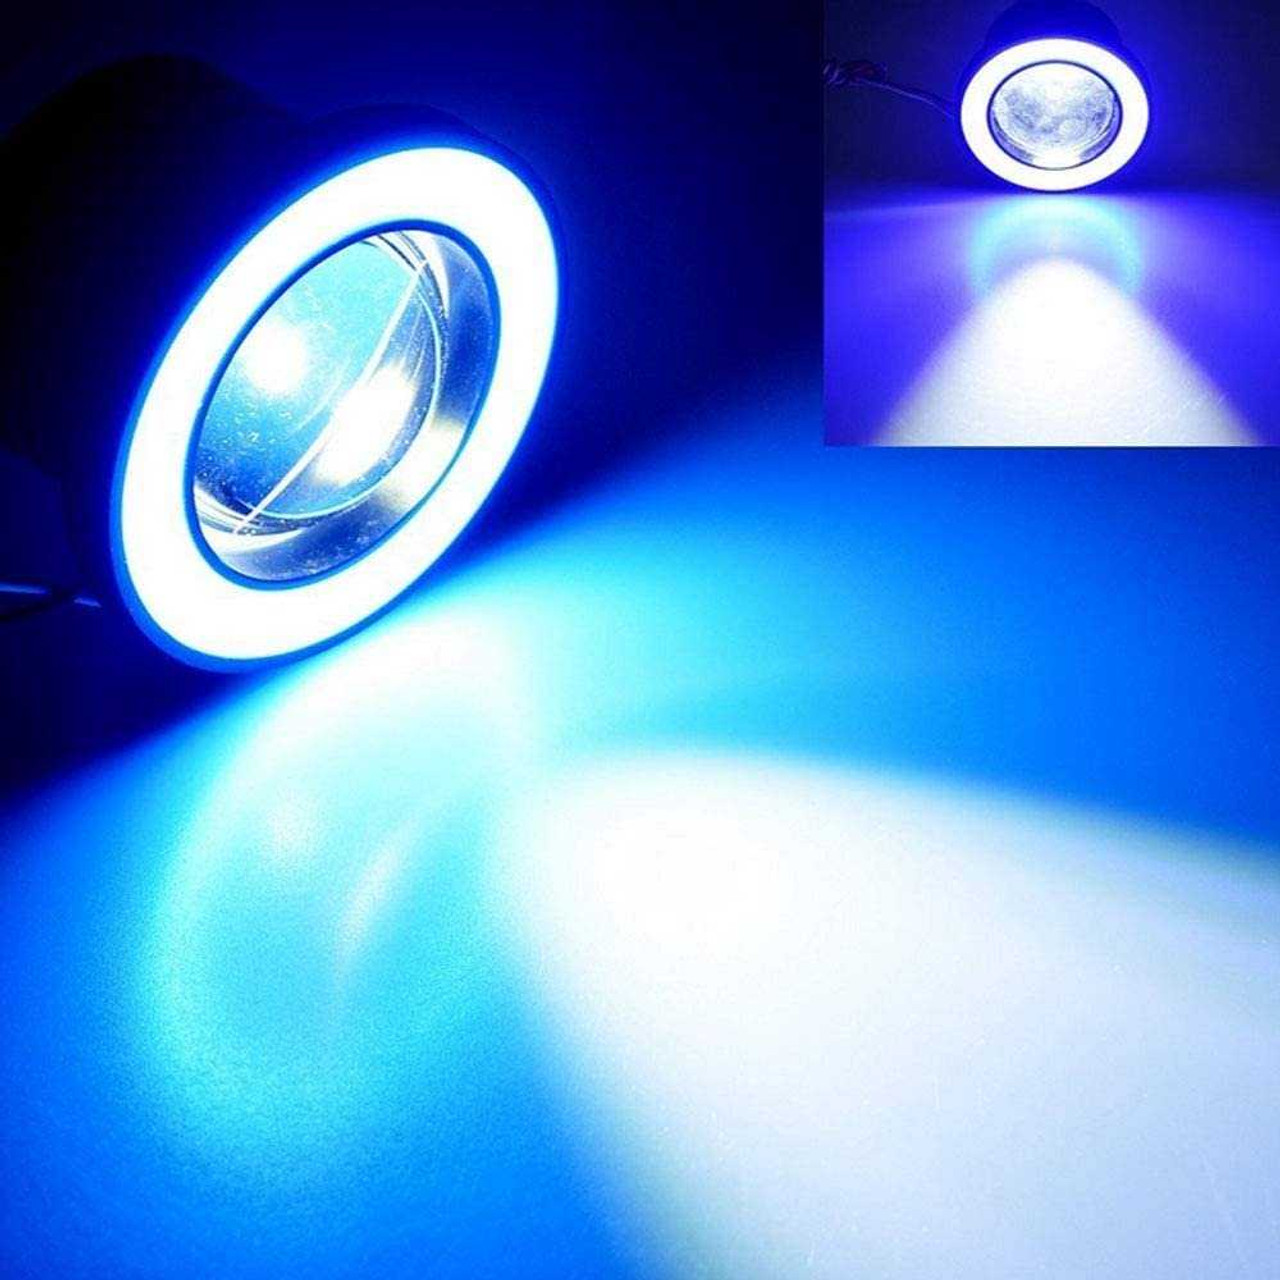 BlingLights Brand LED Blue Halo Fog Lights Lamps for 2013-2020 Fiat 500L